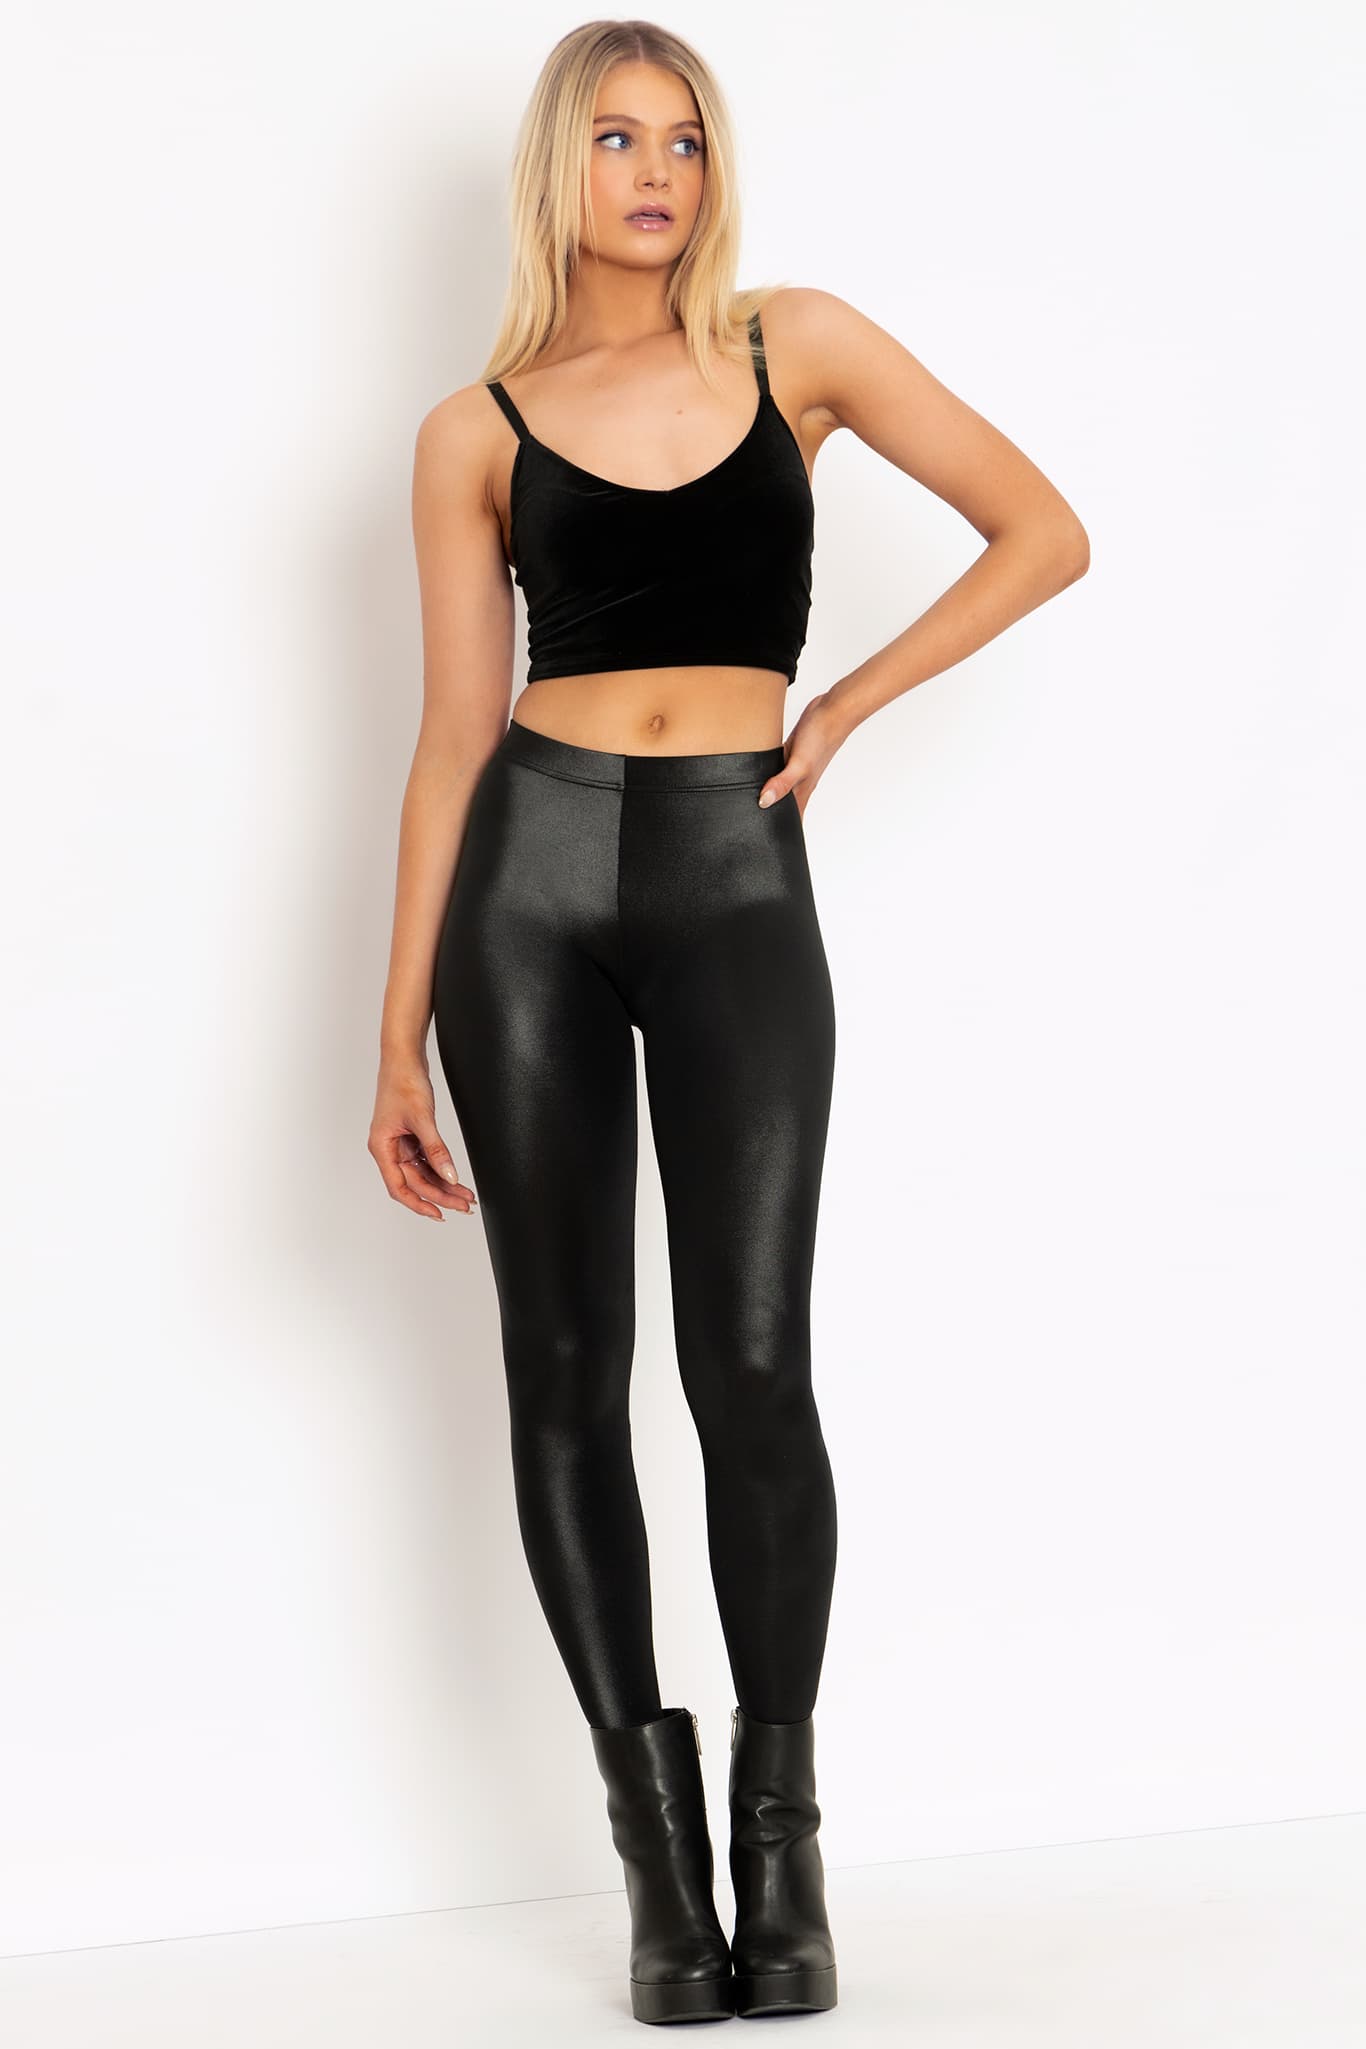 LEOHEX Activewear Lustrous High Rise Legging Womens Active Sparkle Yoga  Leggings (Black, M) at Amazon Women's Clothing store